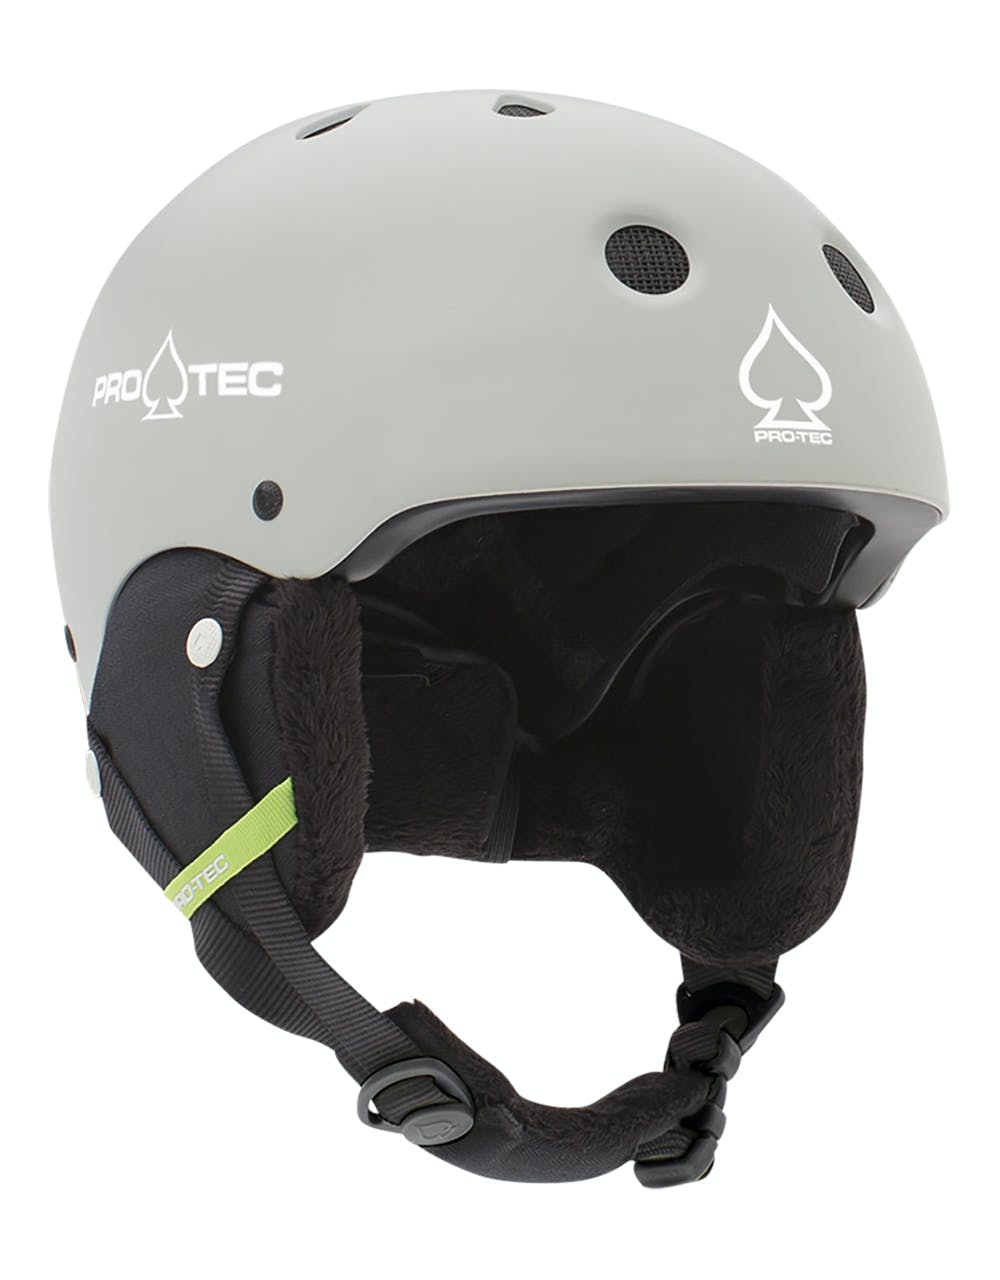 Pro-Tec Classic 2020 Snowboard Helmet - Matte Light Grey